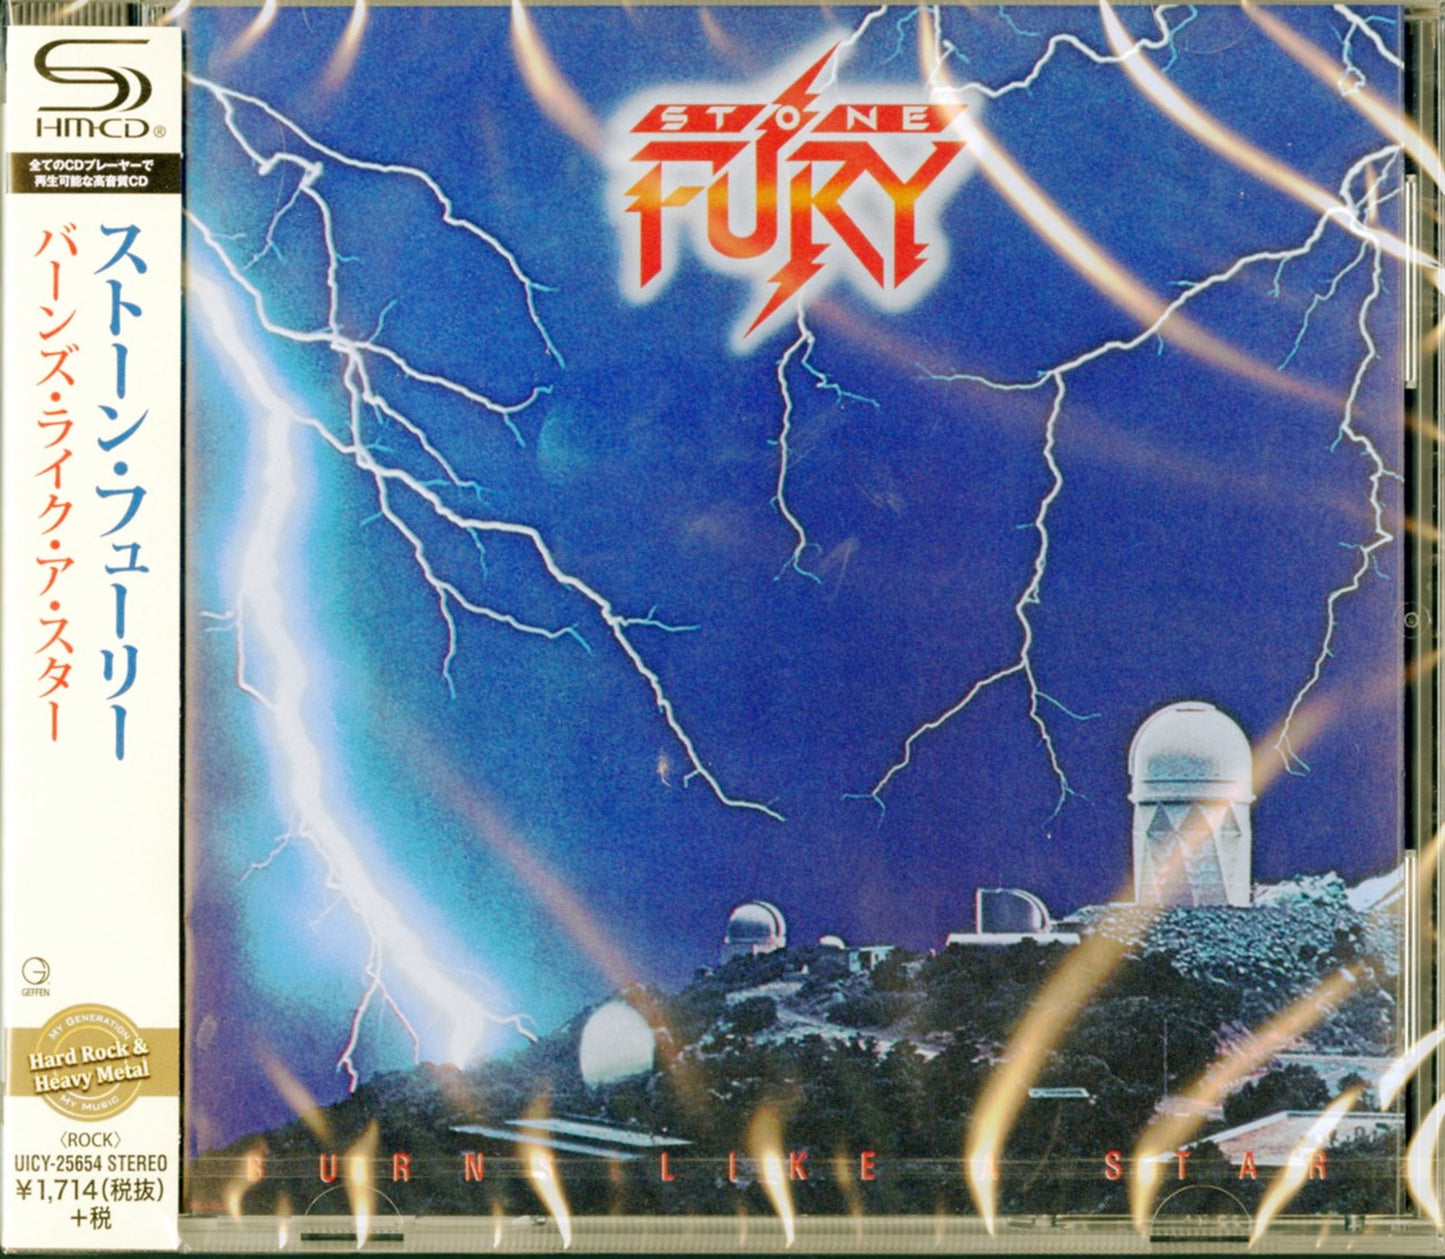 Stone Fury - Burns Like A Star - Japan  SHM-CD